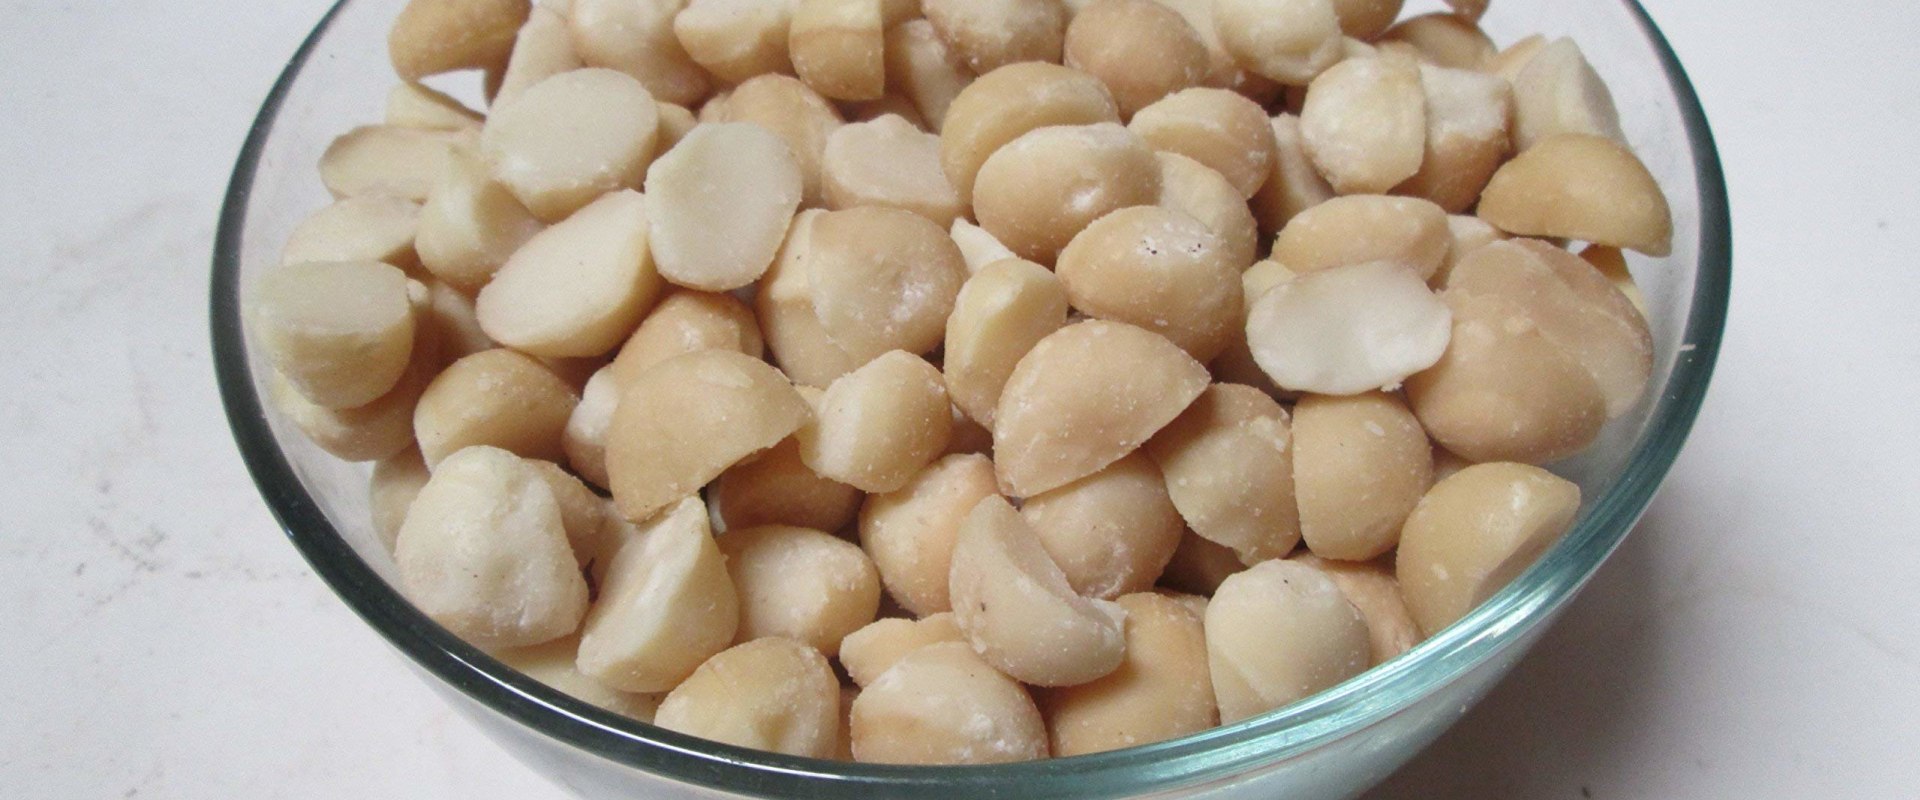 Where can i buy bulk macadamia nuts?